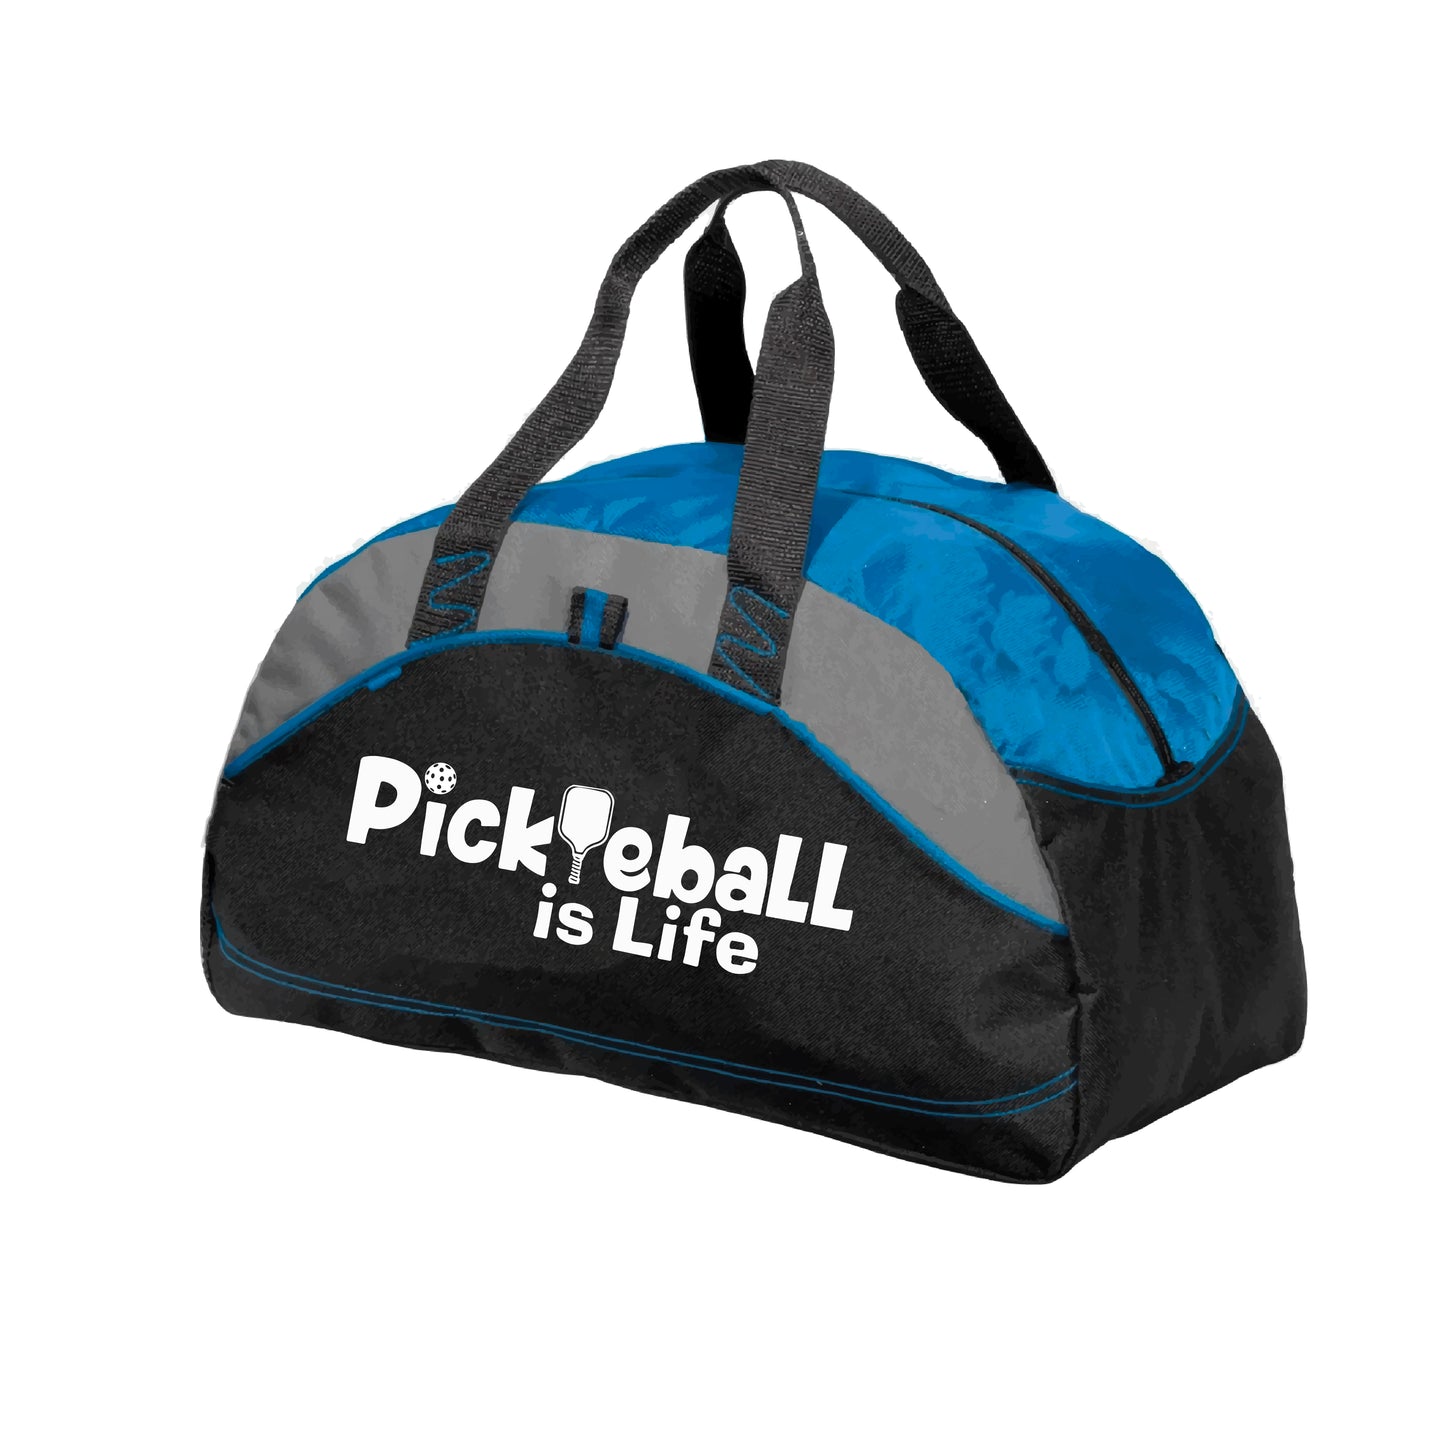 Pickleball is Life | Pickleball Sports Duffel | Medium Size Court Bag